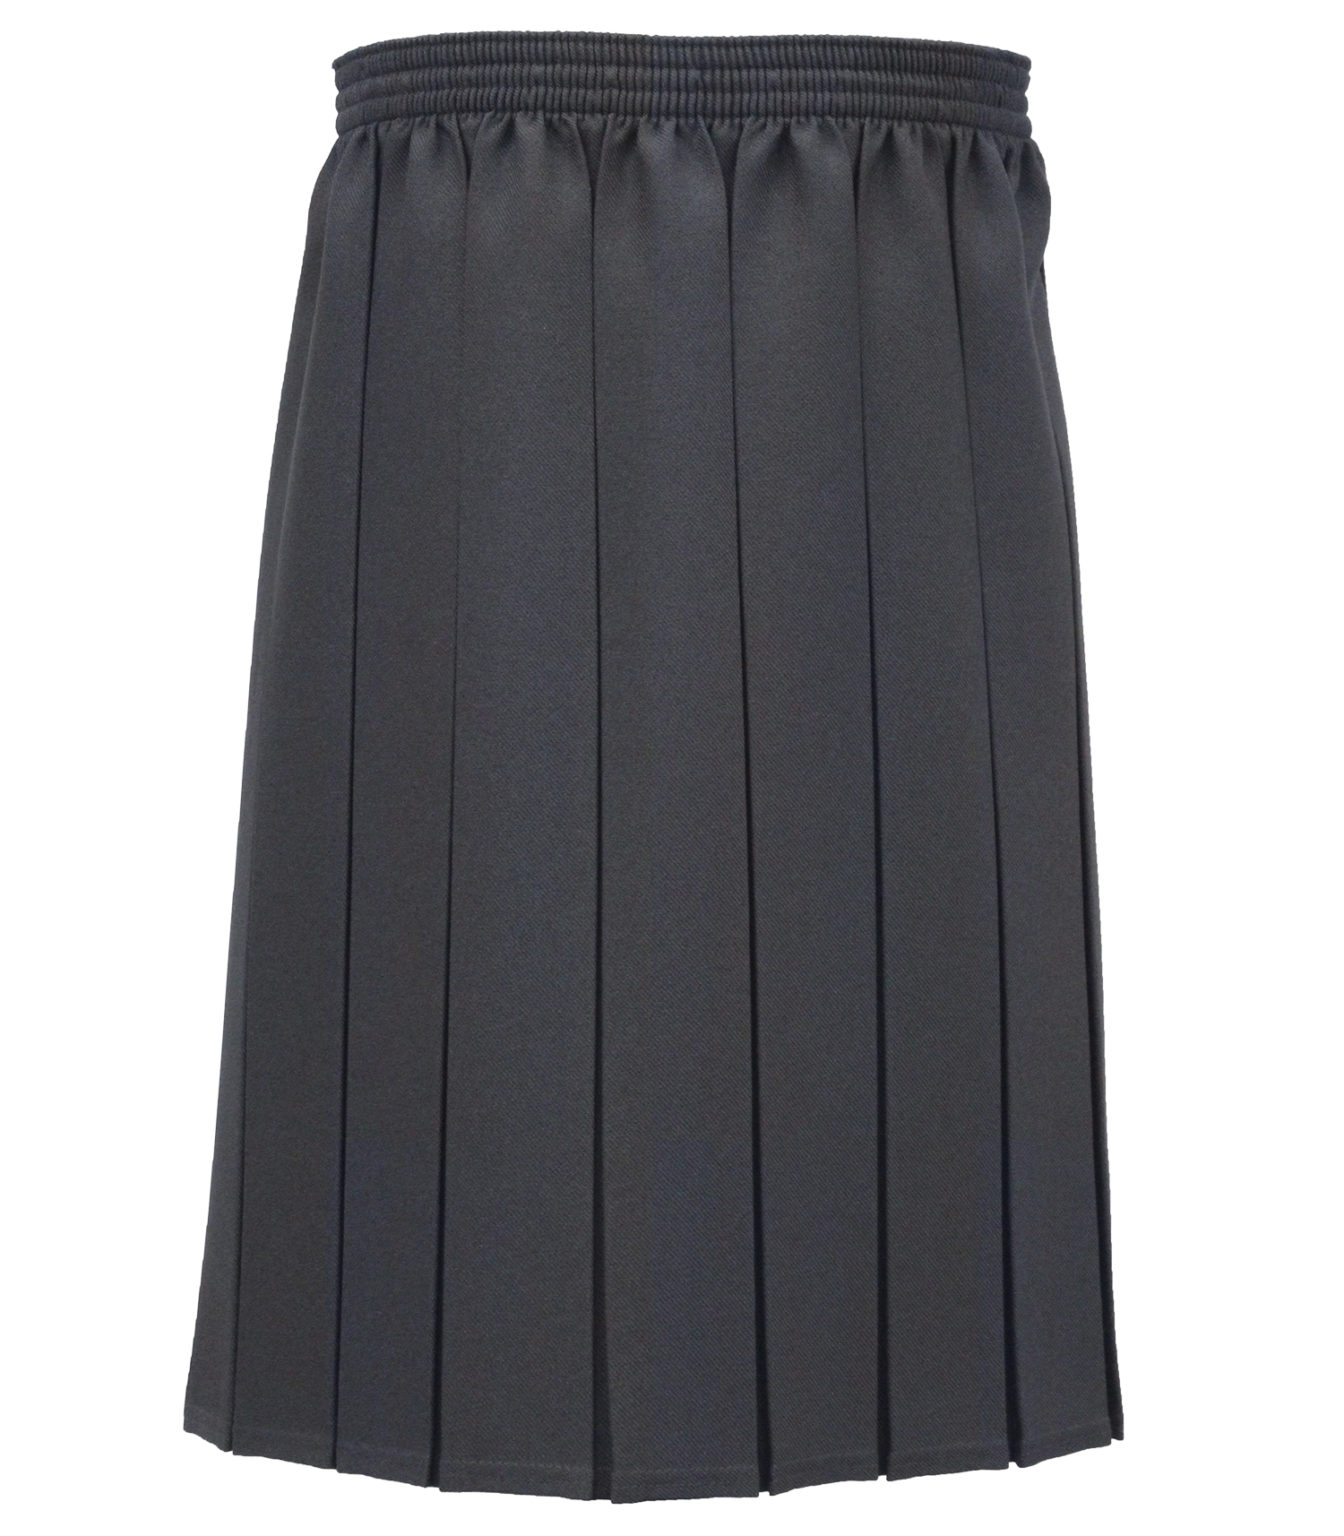 Grey Pleated Skirt (201) - Quality Schoolwear